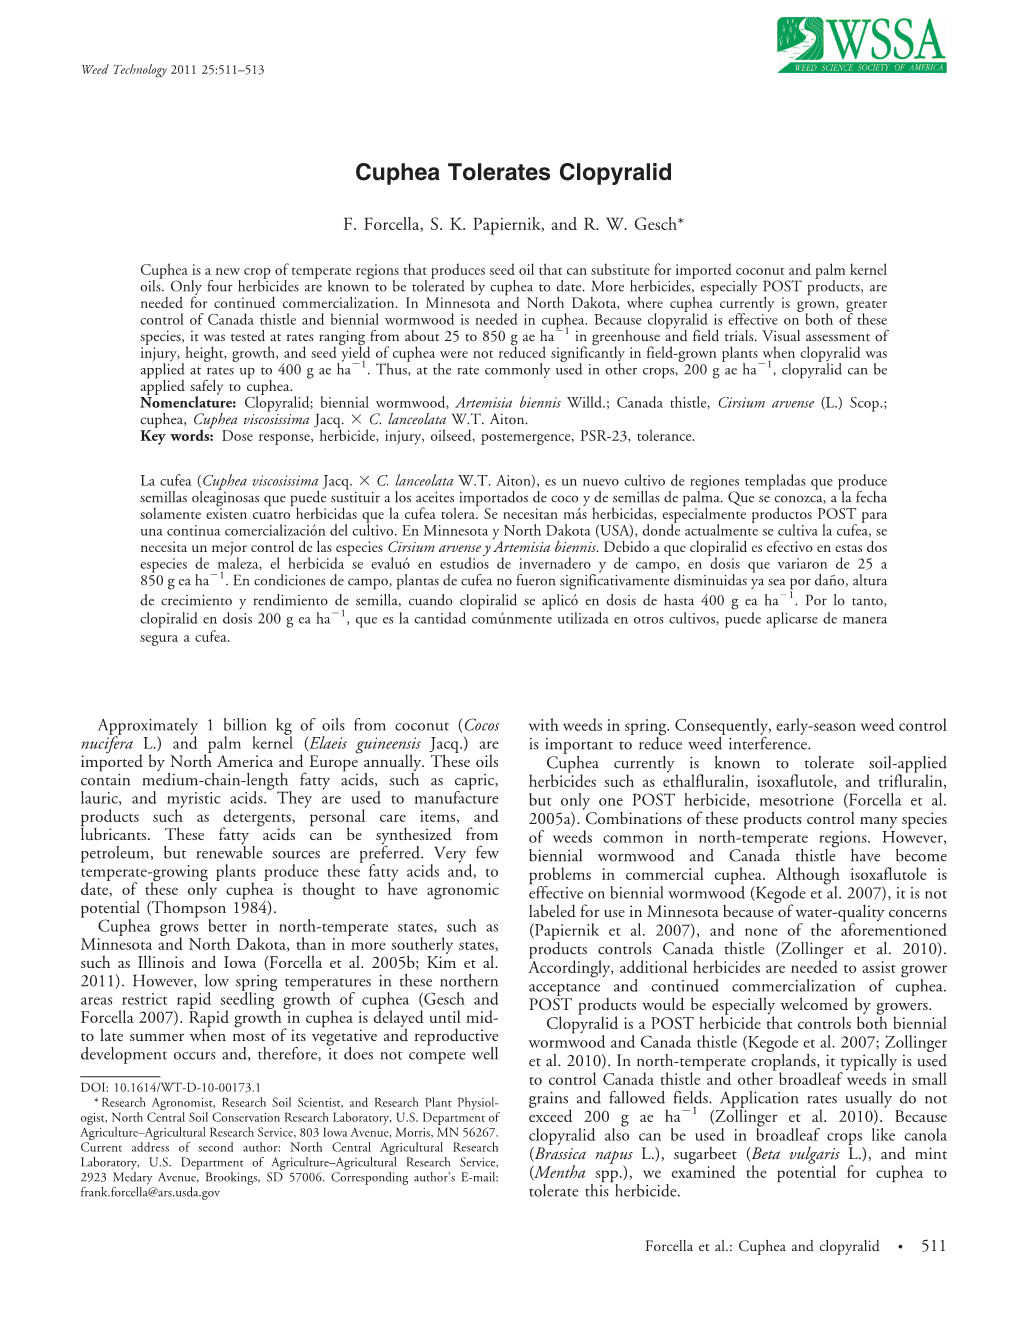 Cuphea Tolerates Clopyralid